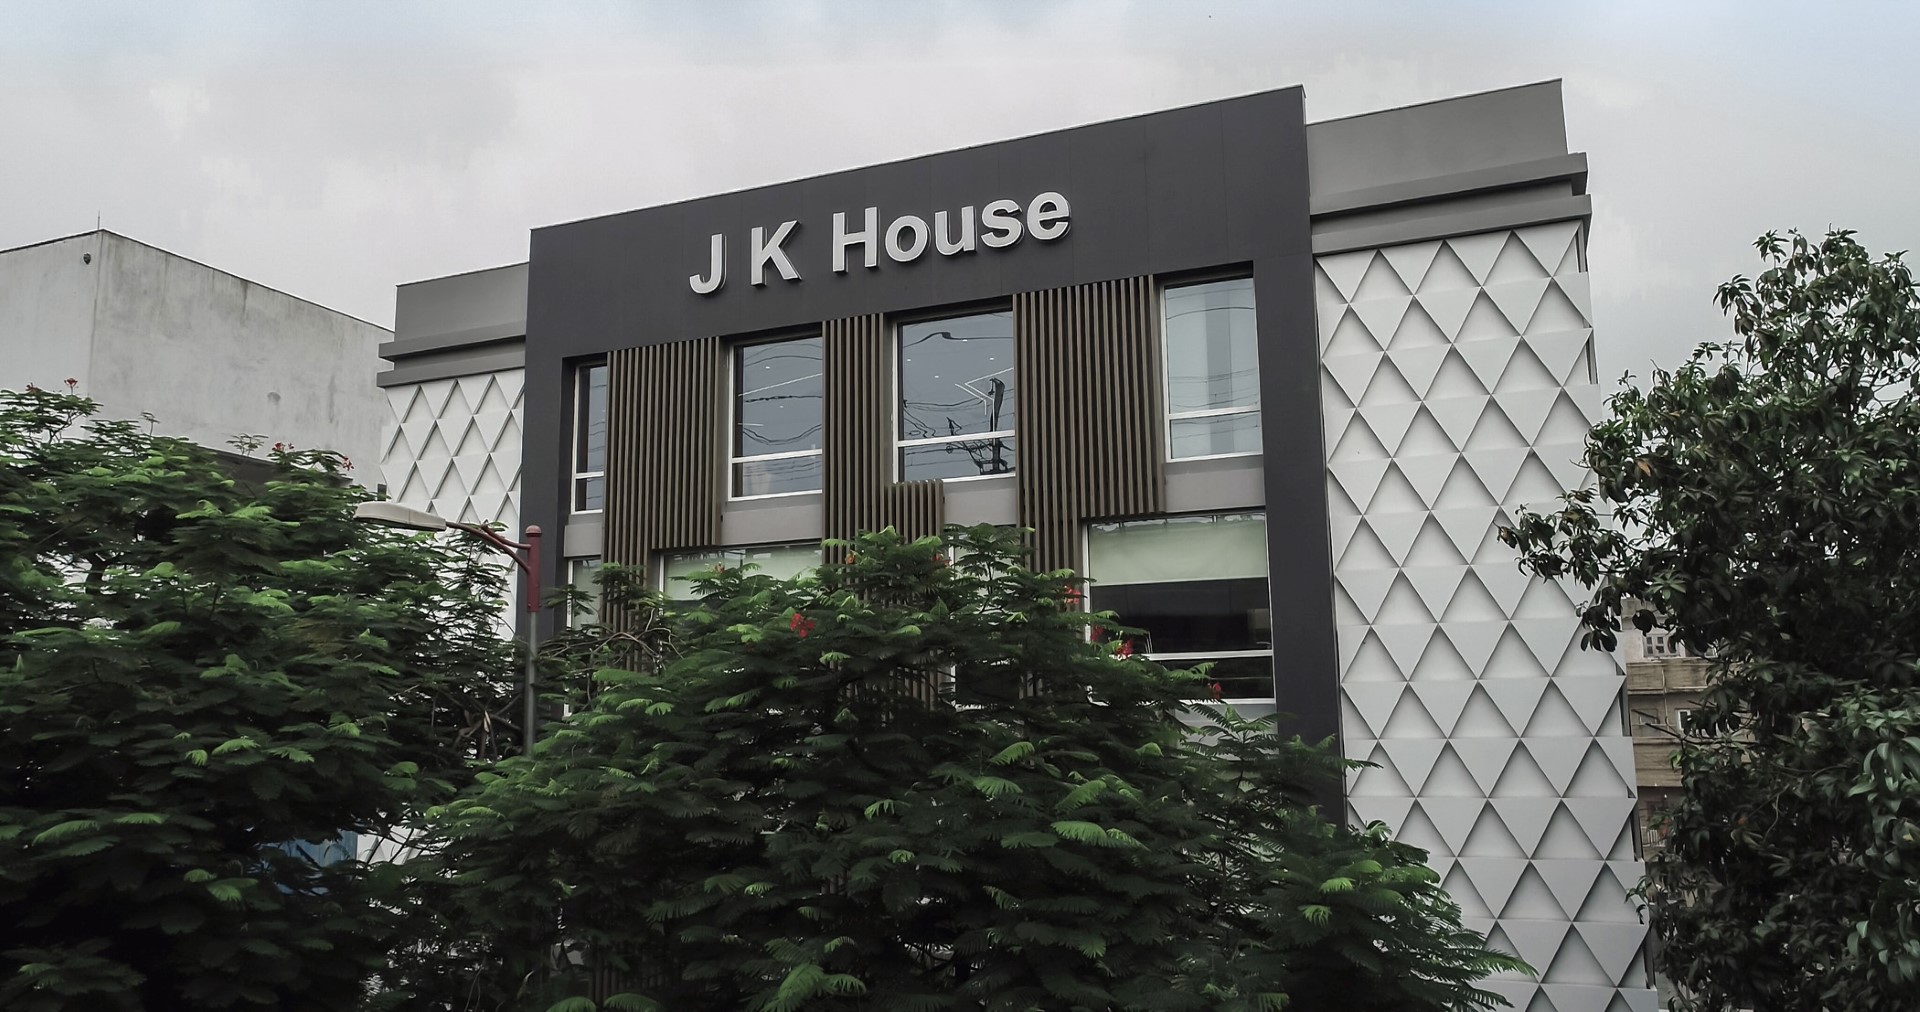 jk house tour